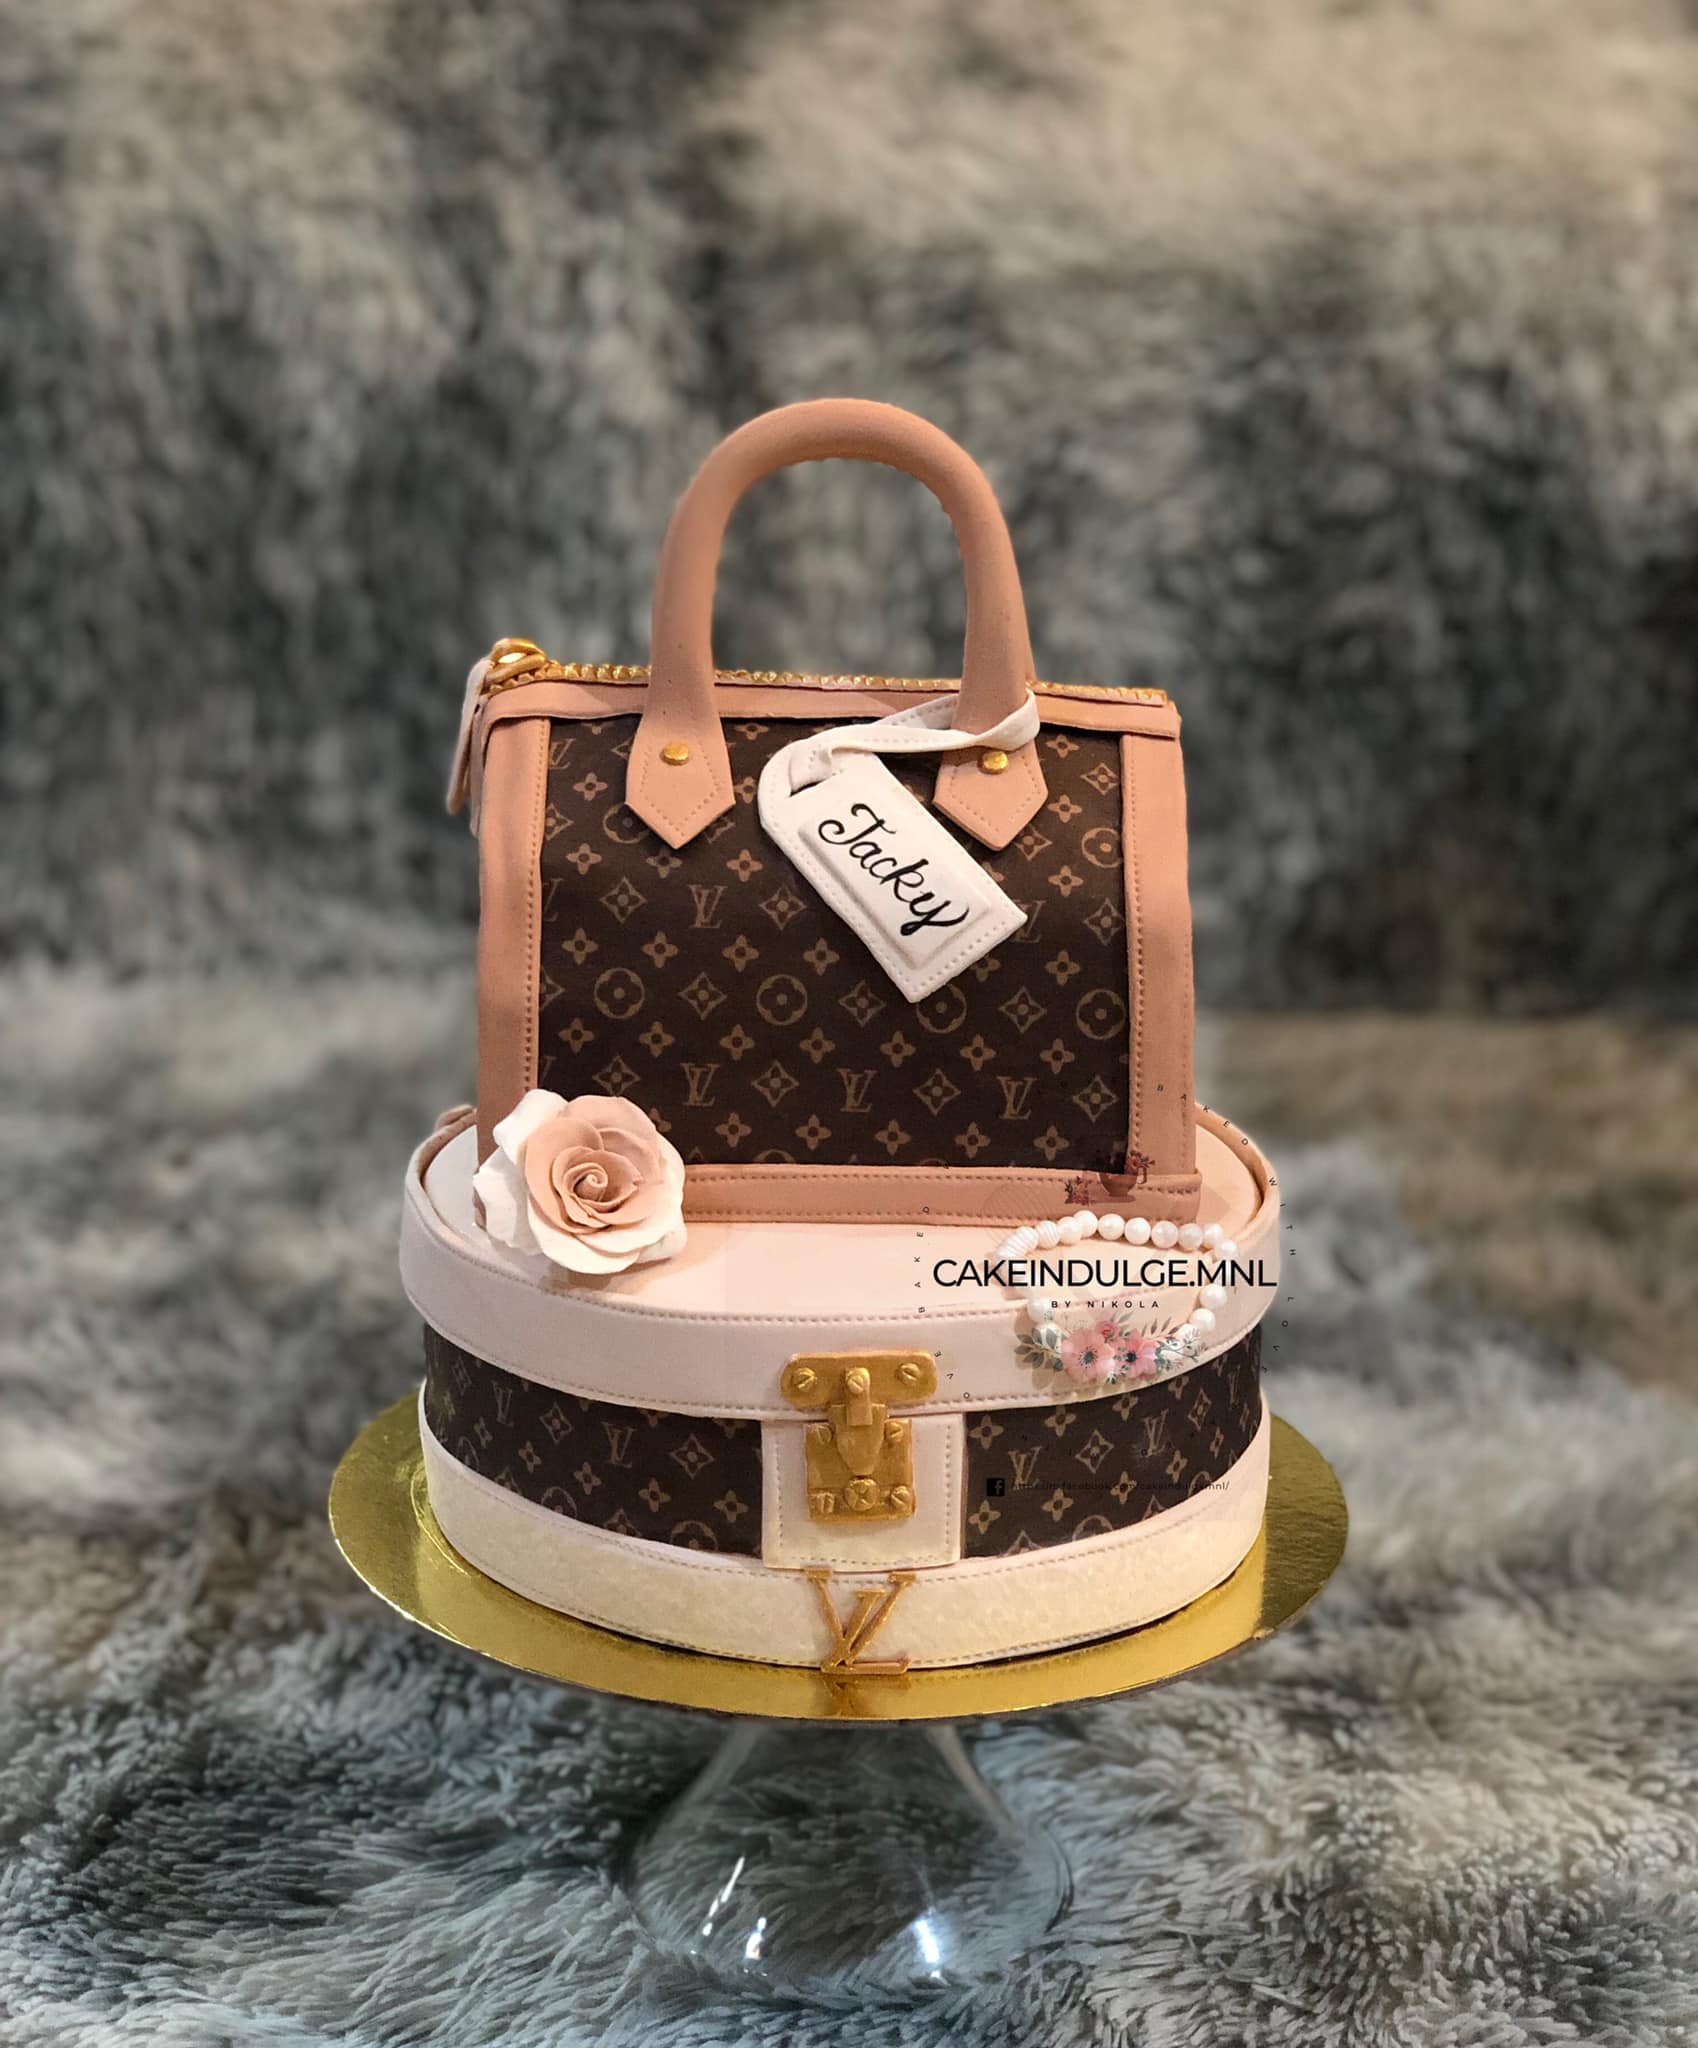 Louis Vuitton Designer Handbag Cake How to Make  Decorated Treats